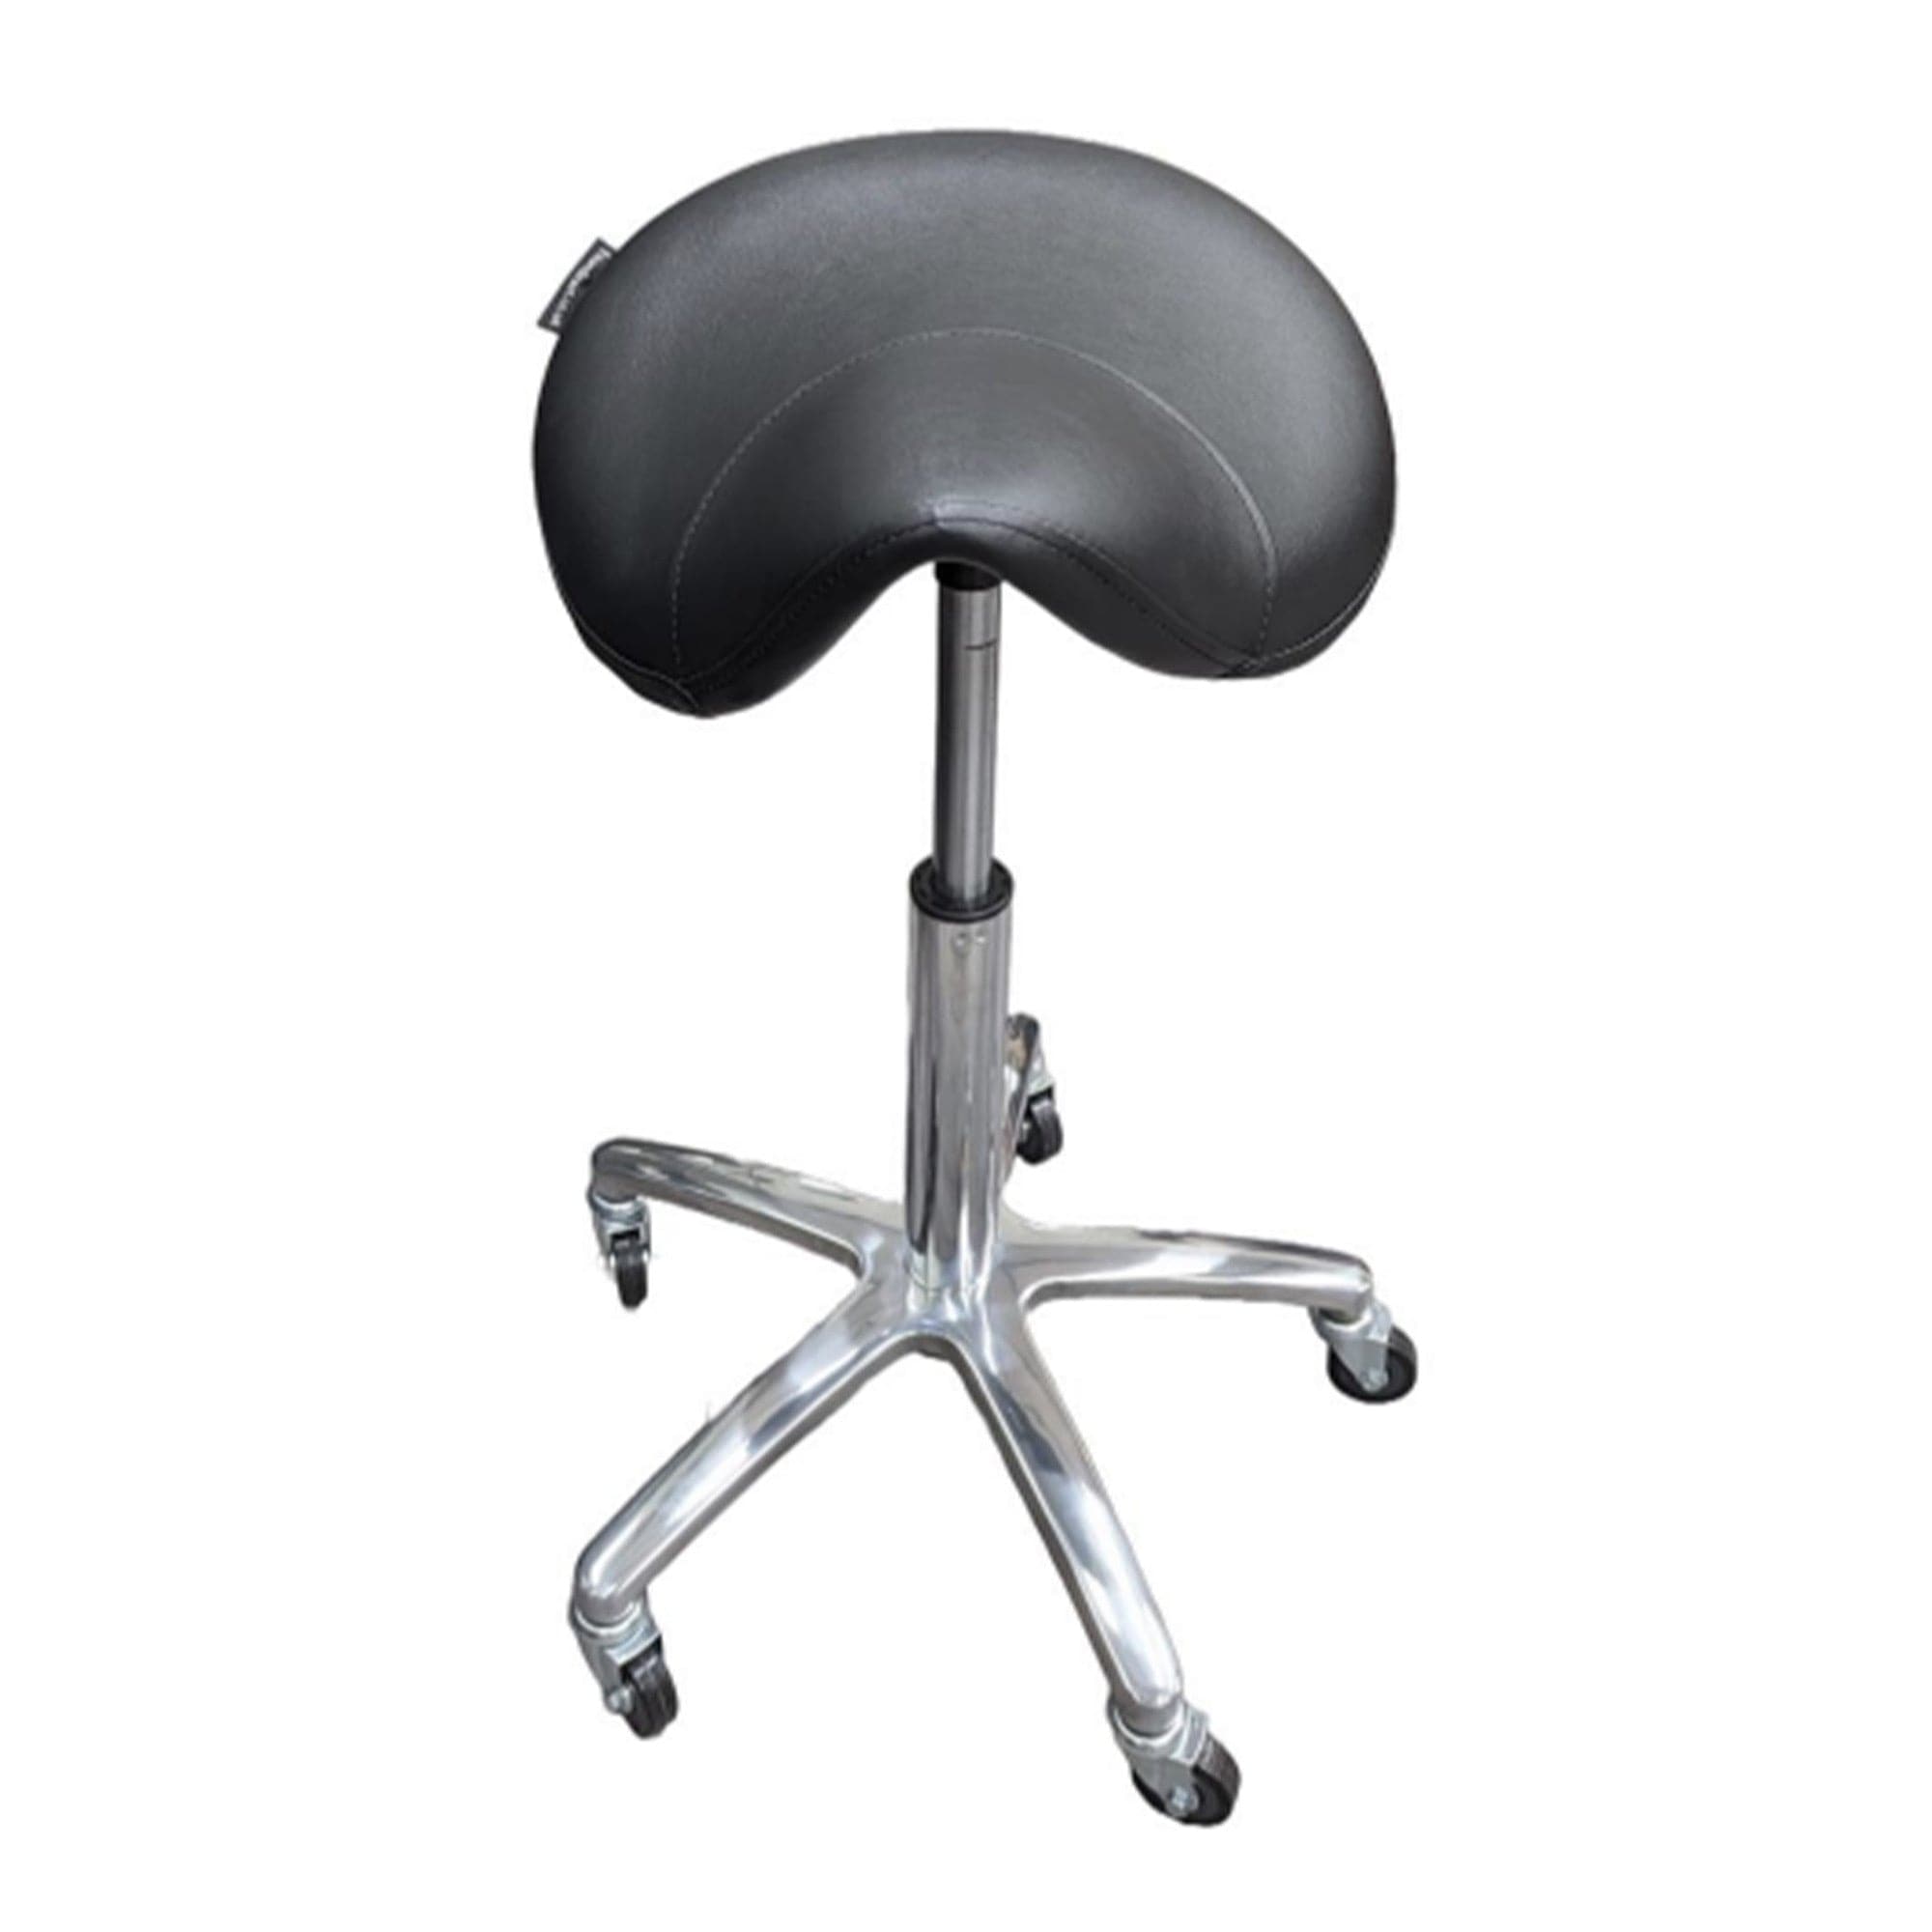 Eson - Saddle Stool Chair Adjustable Height & Swivel